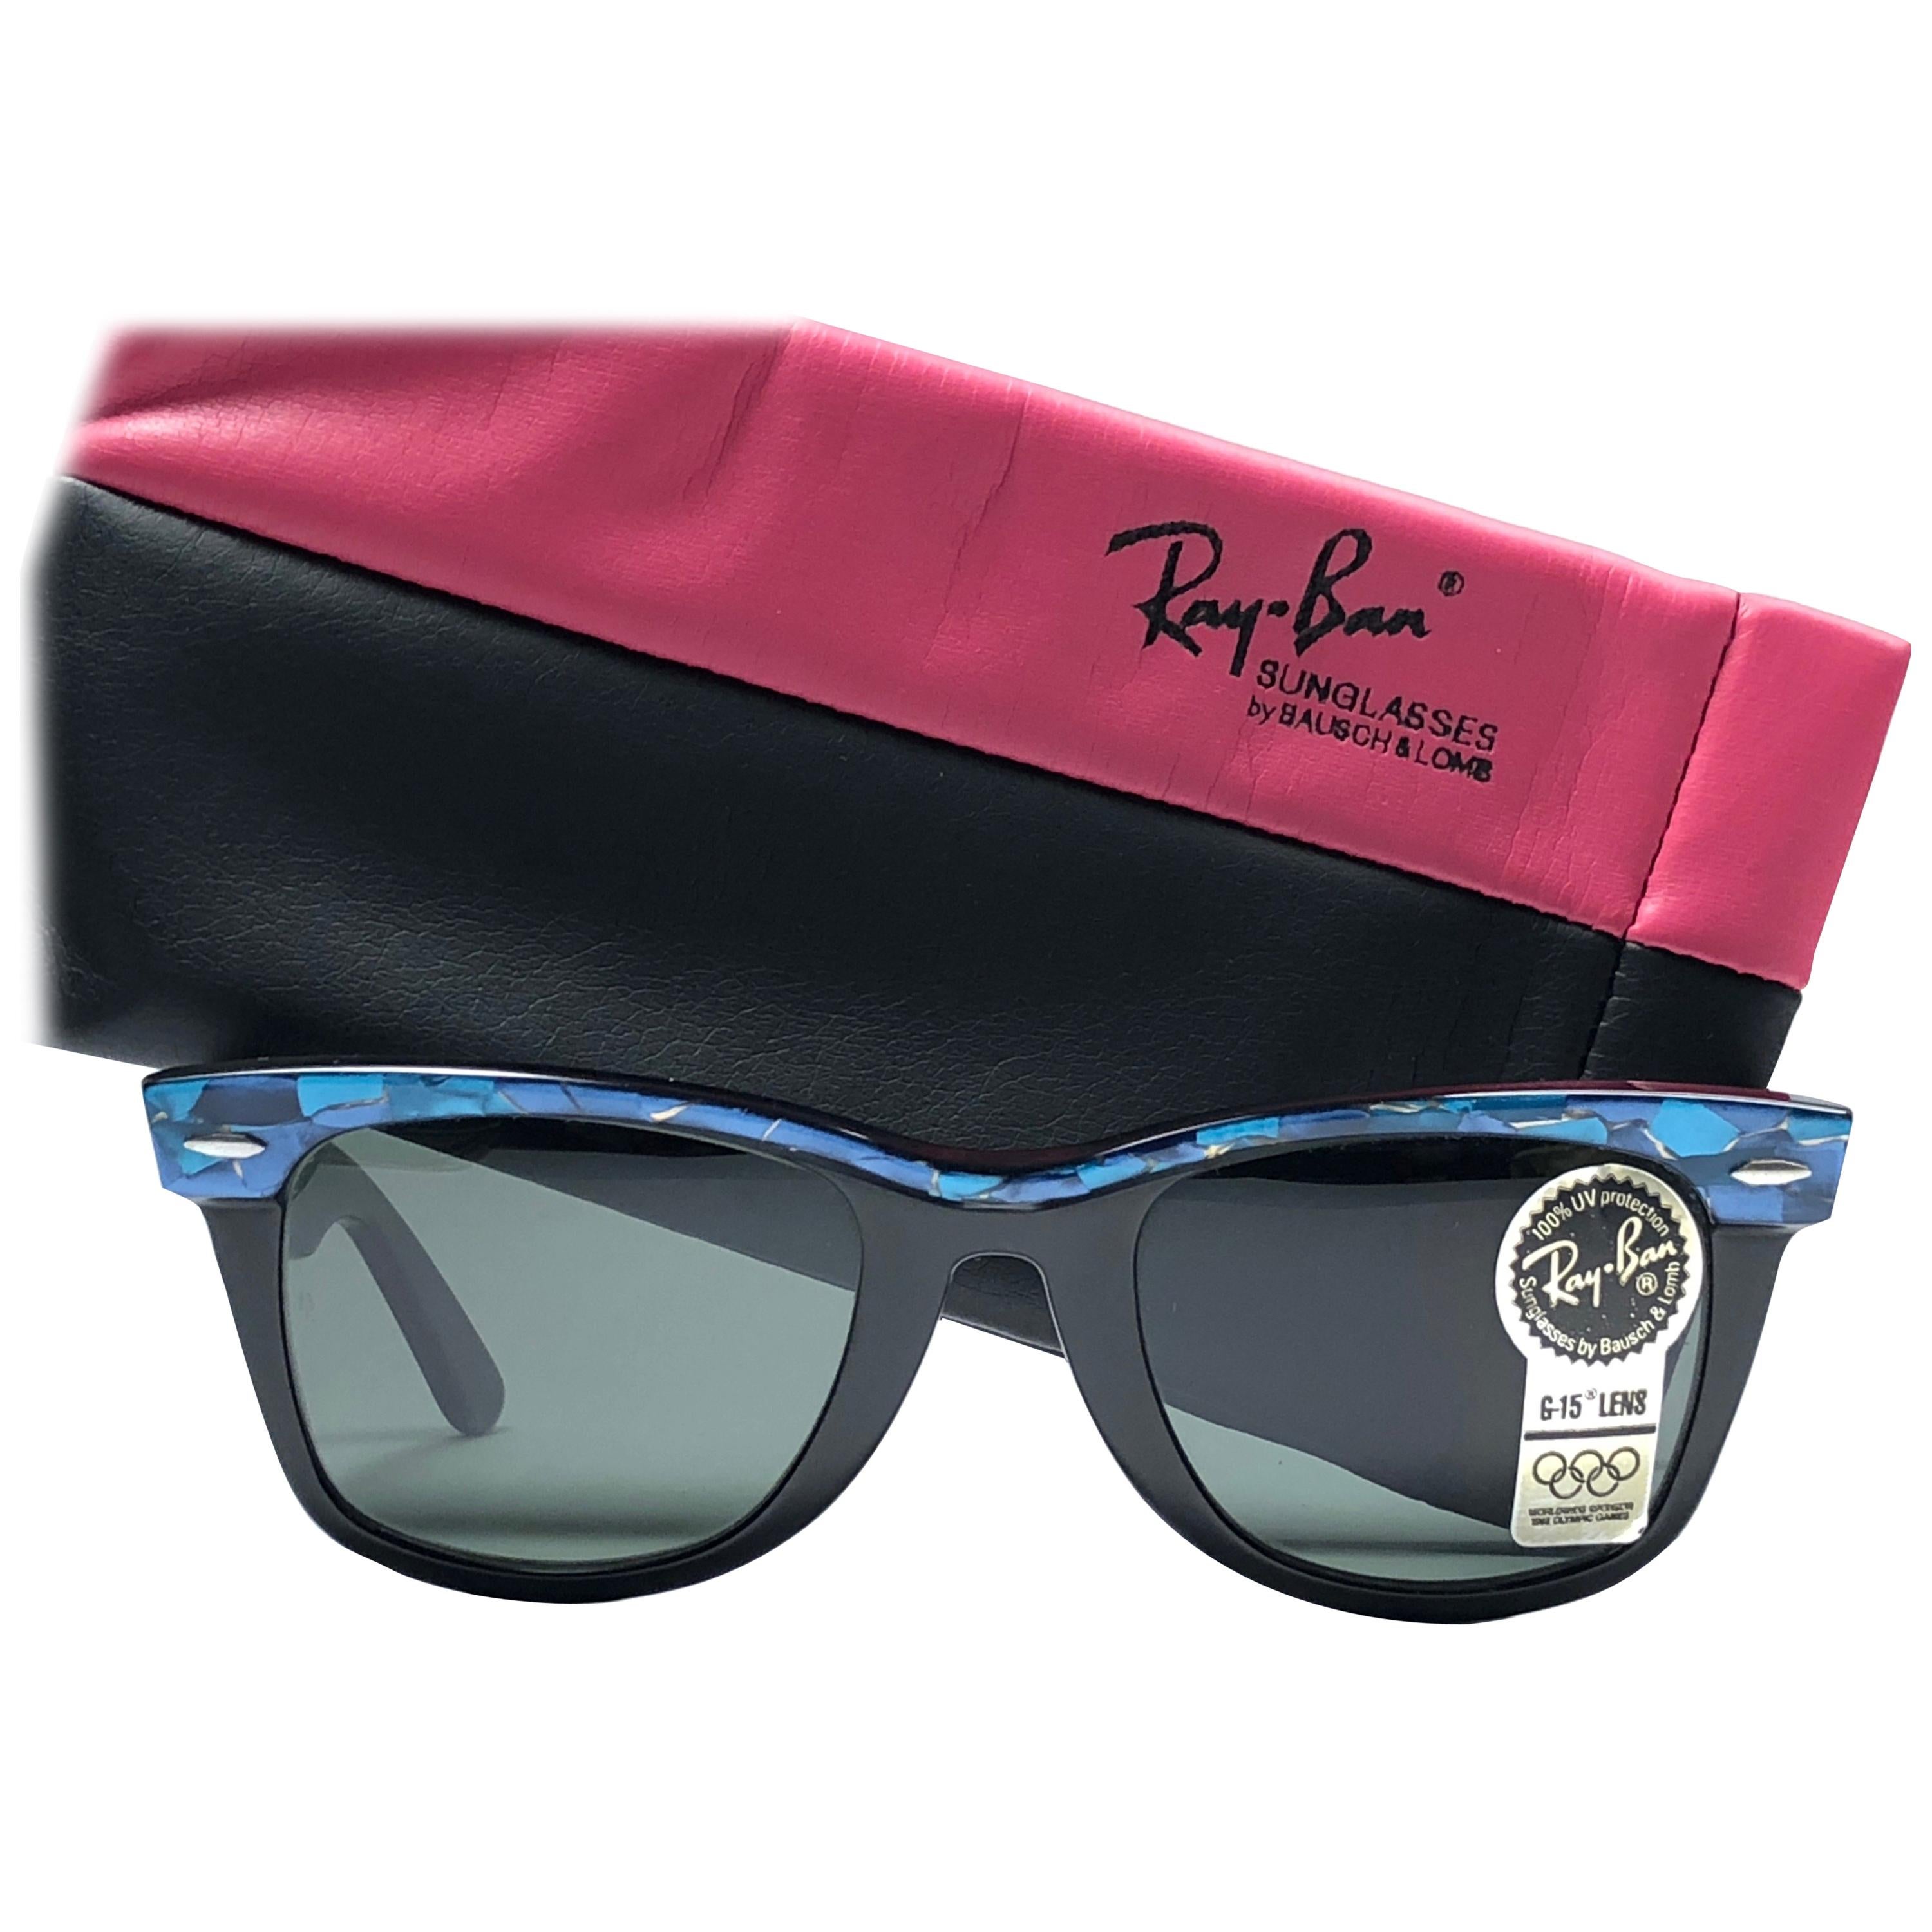 New Ray Ban The Wayfarer Blue / Black B&L G15 Grey Lenses USA 80's Sunglasses